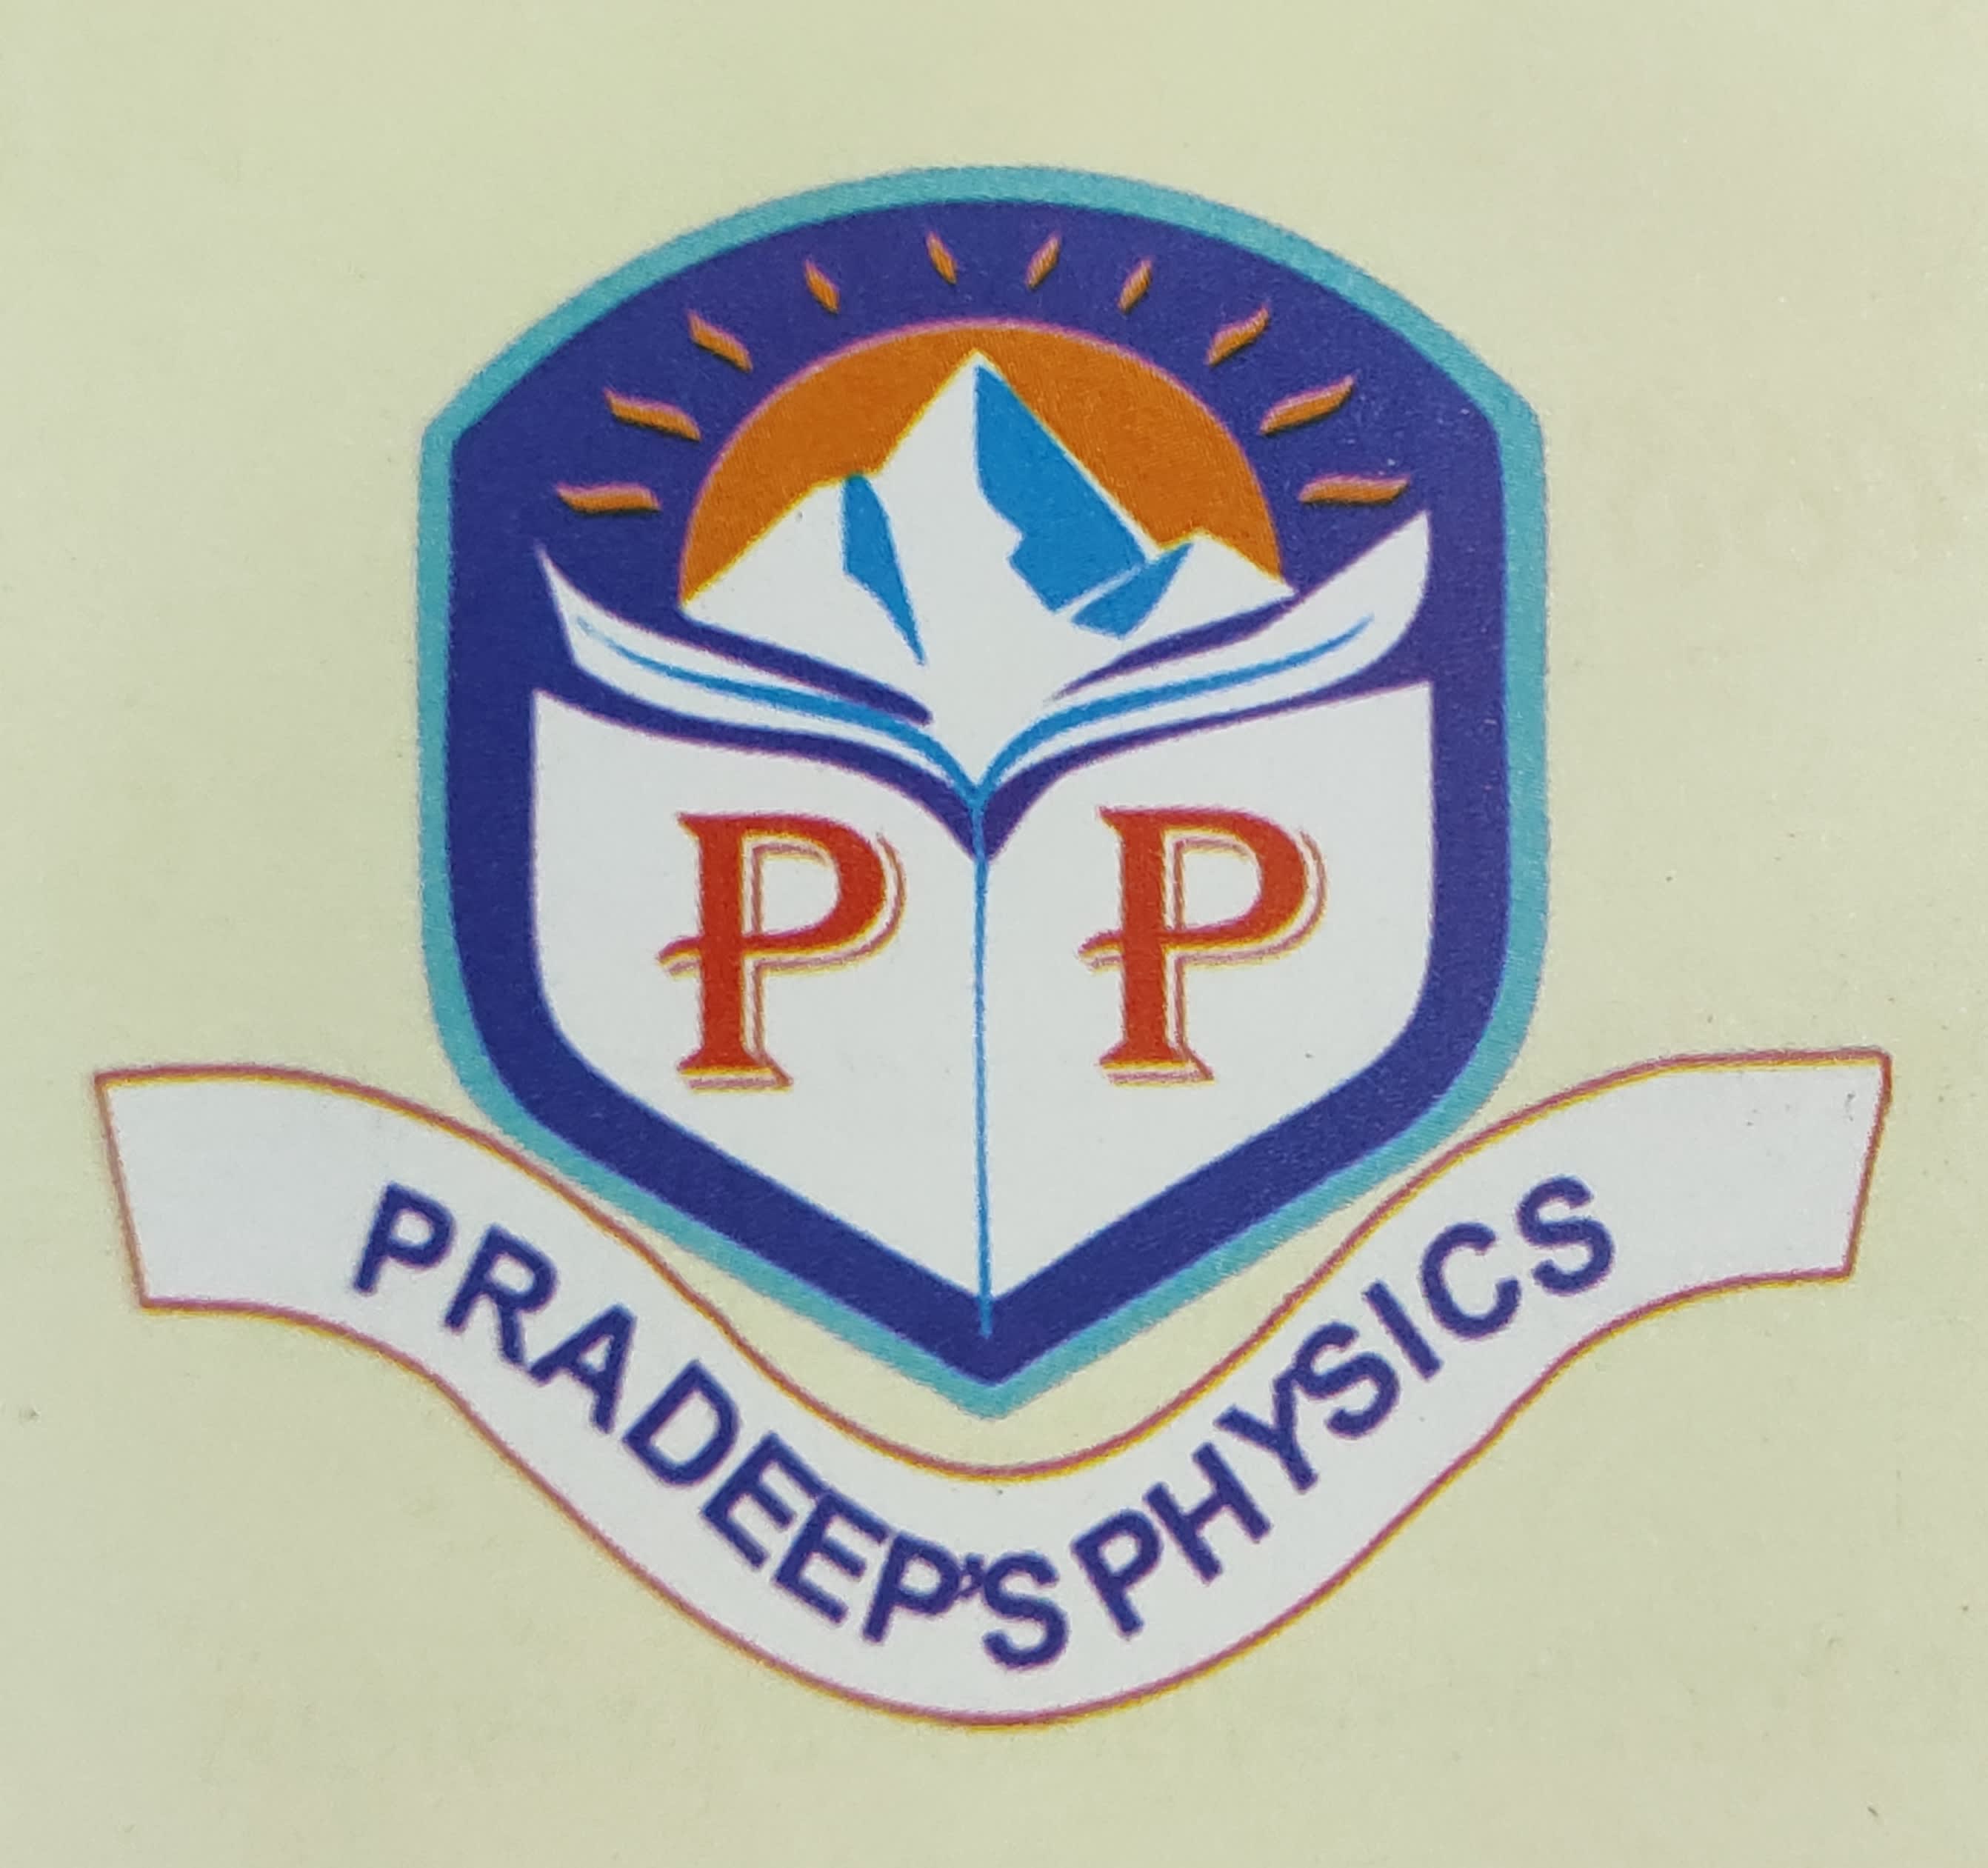 Pradeep's Physics